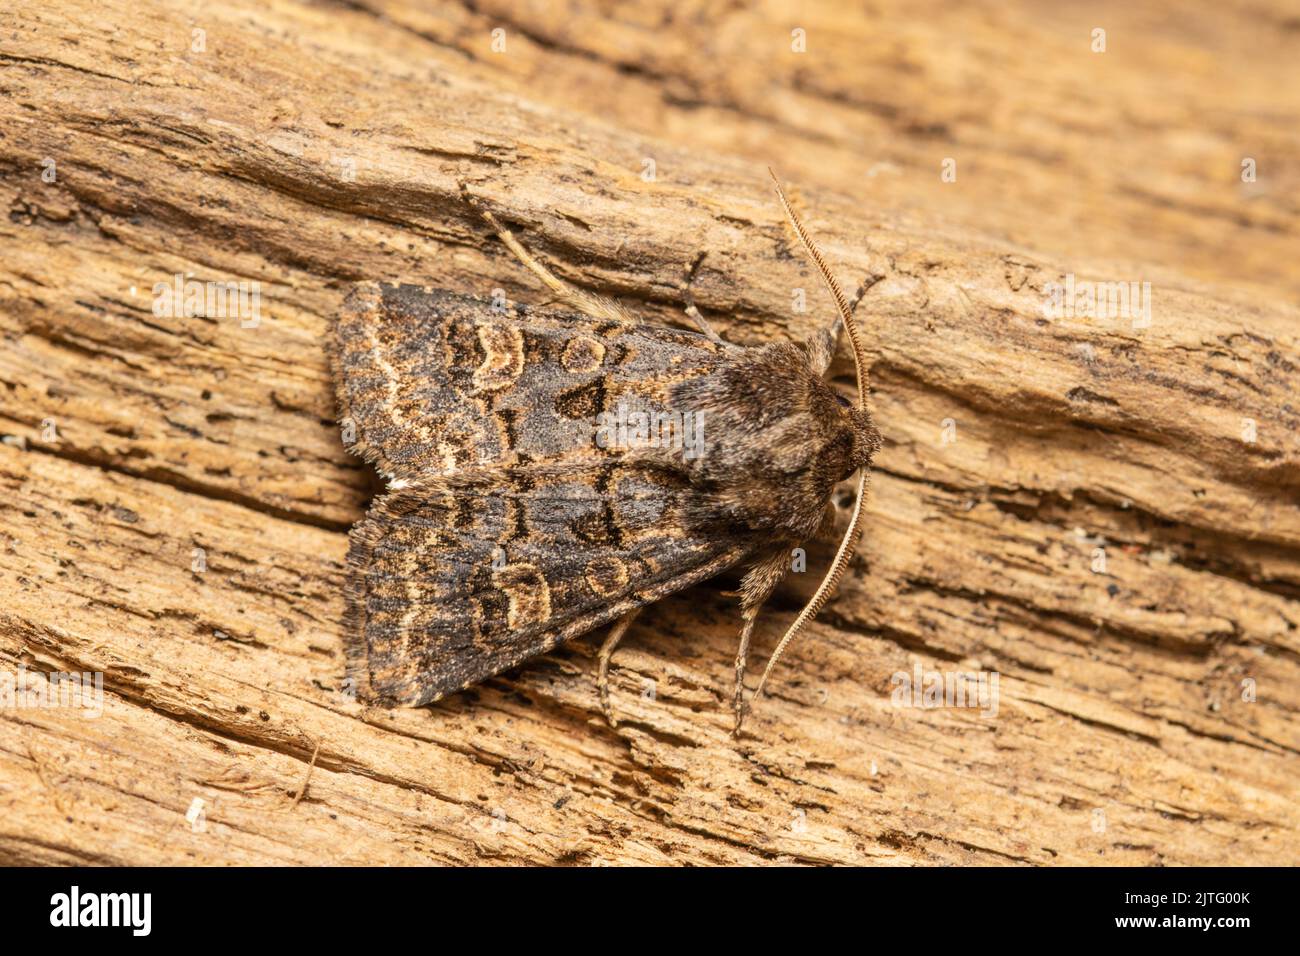 A Hedge Rustic moth, Tholera cespitis, resting on a rotten log. Stock Photo